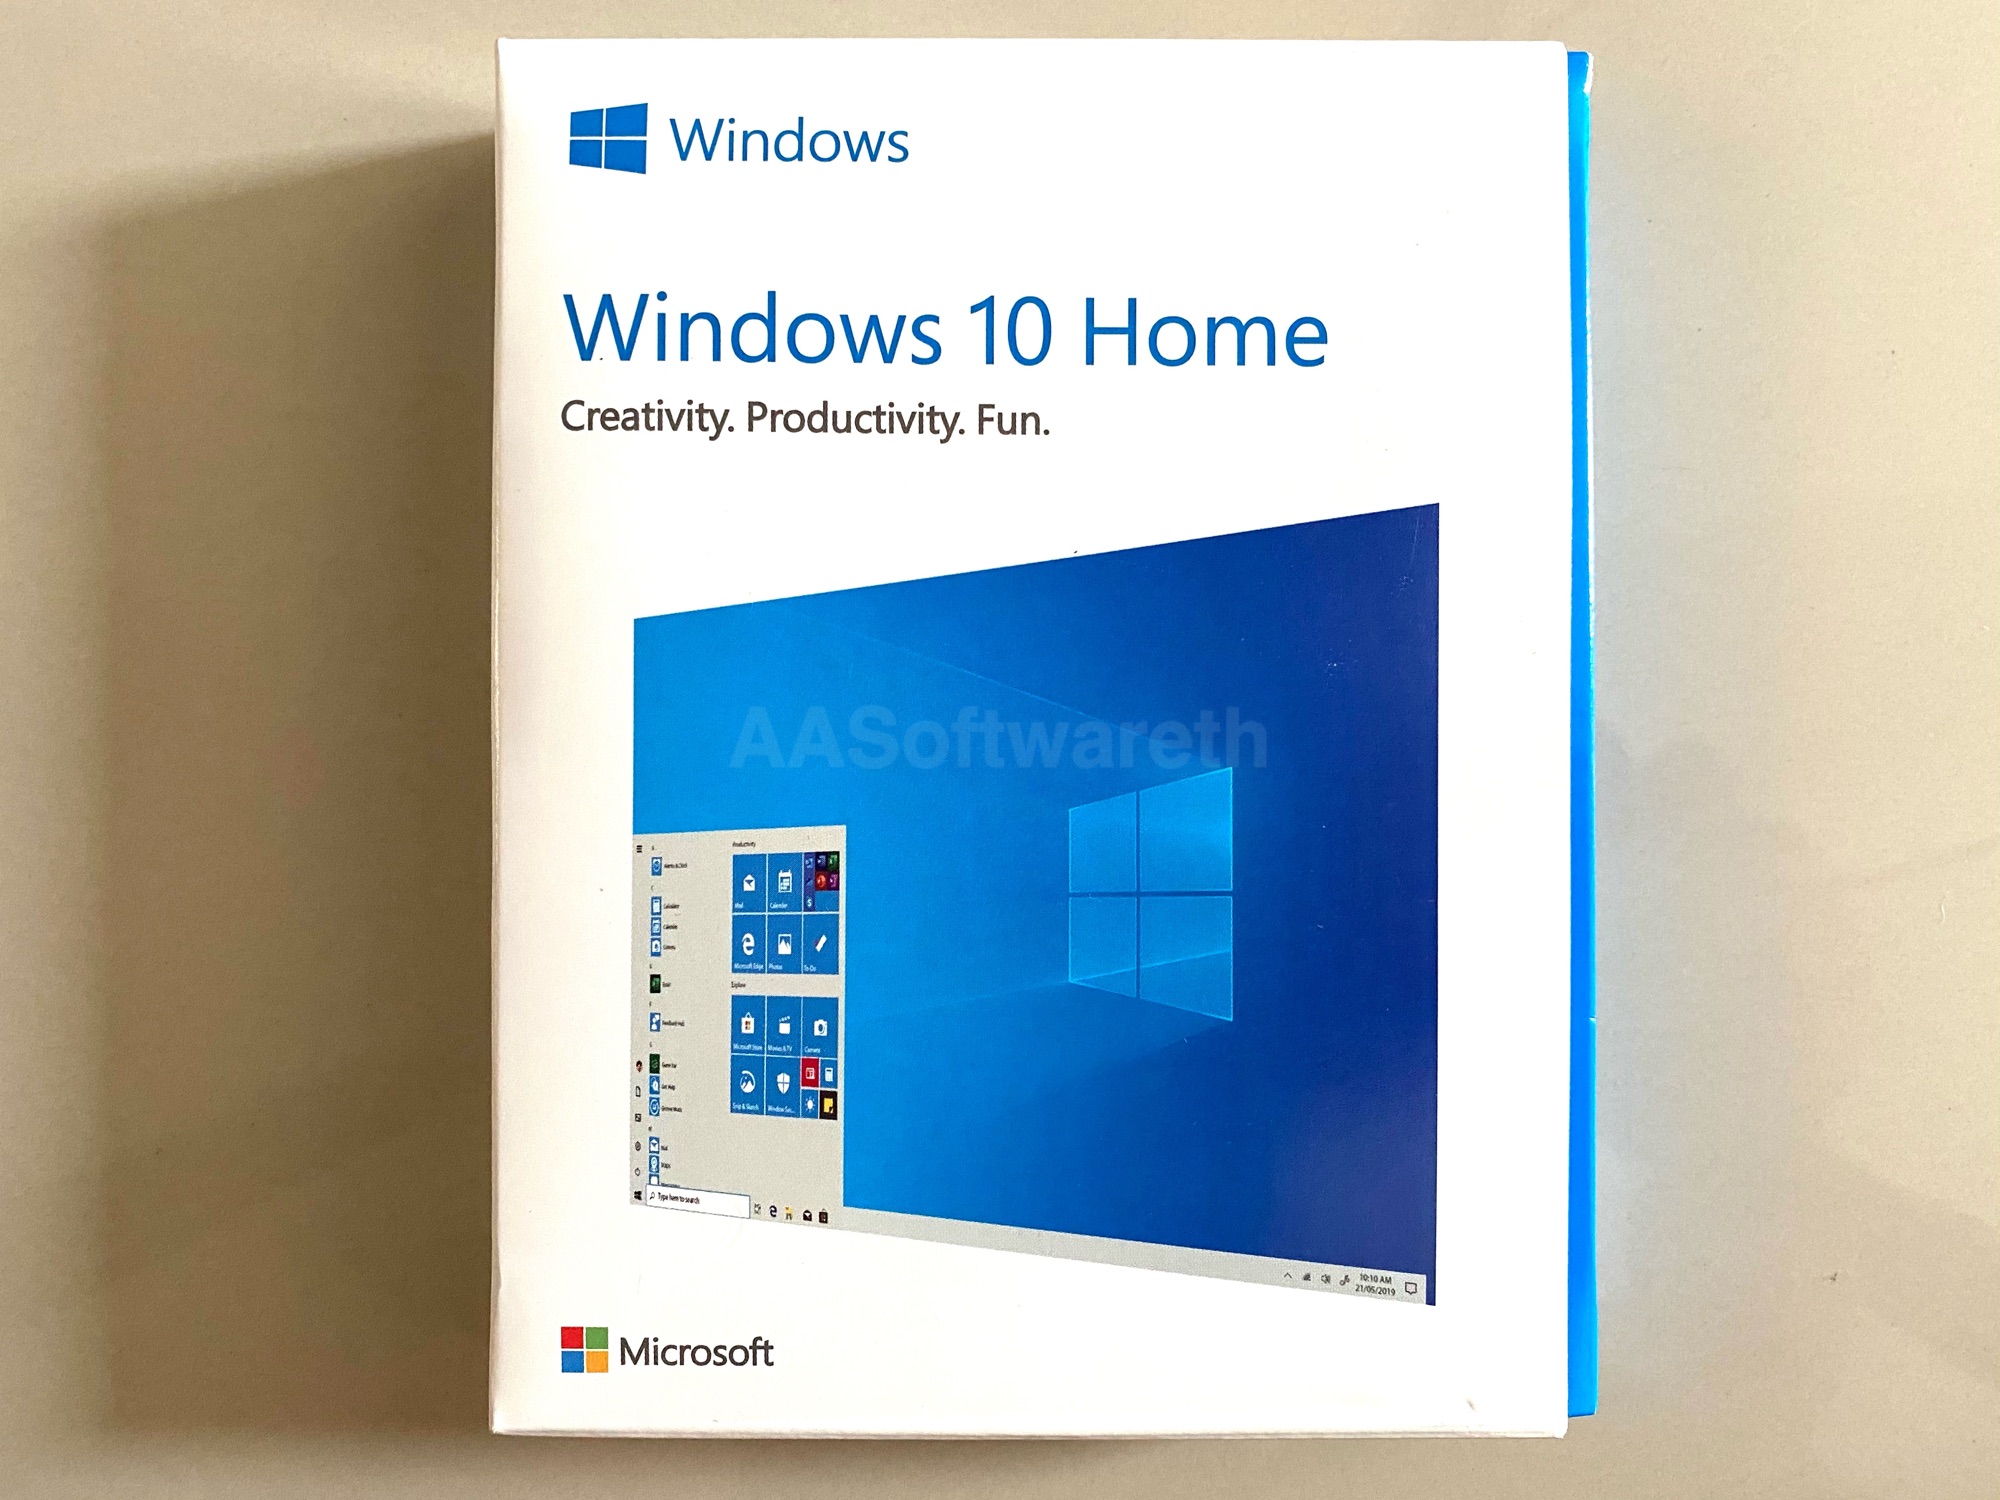 windows 10 home 64 bit